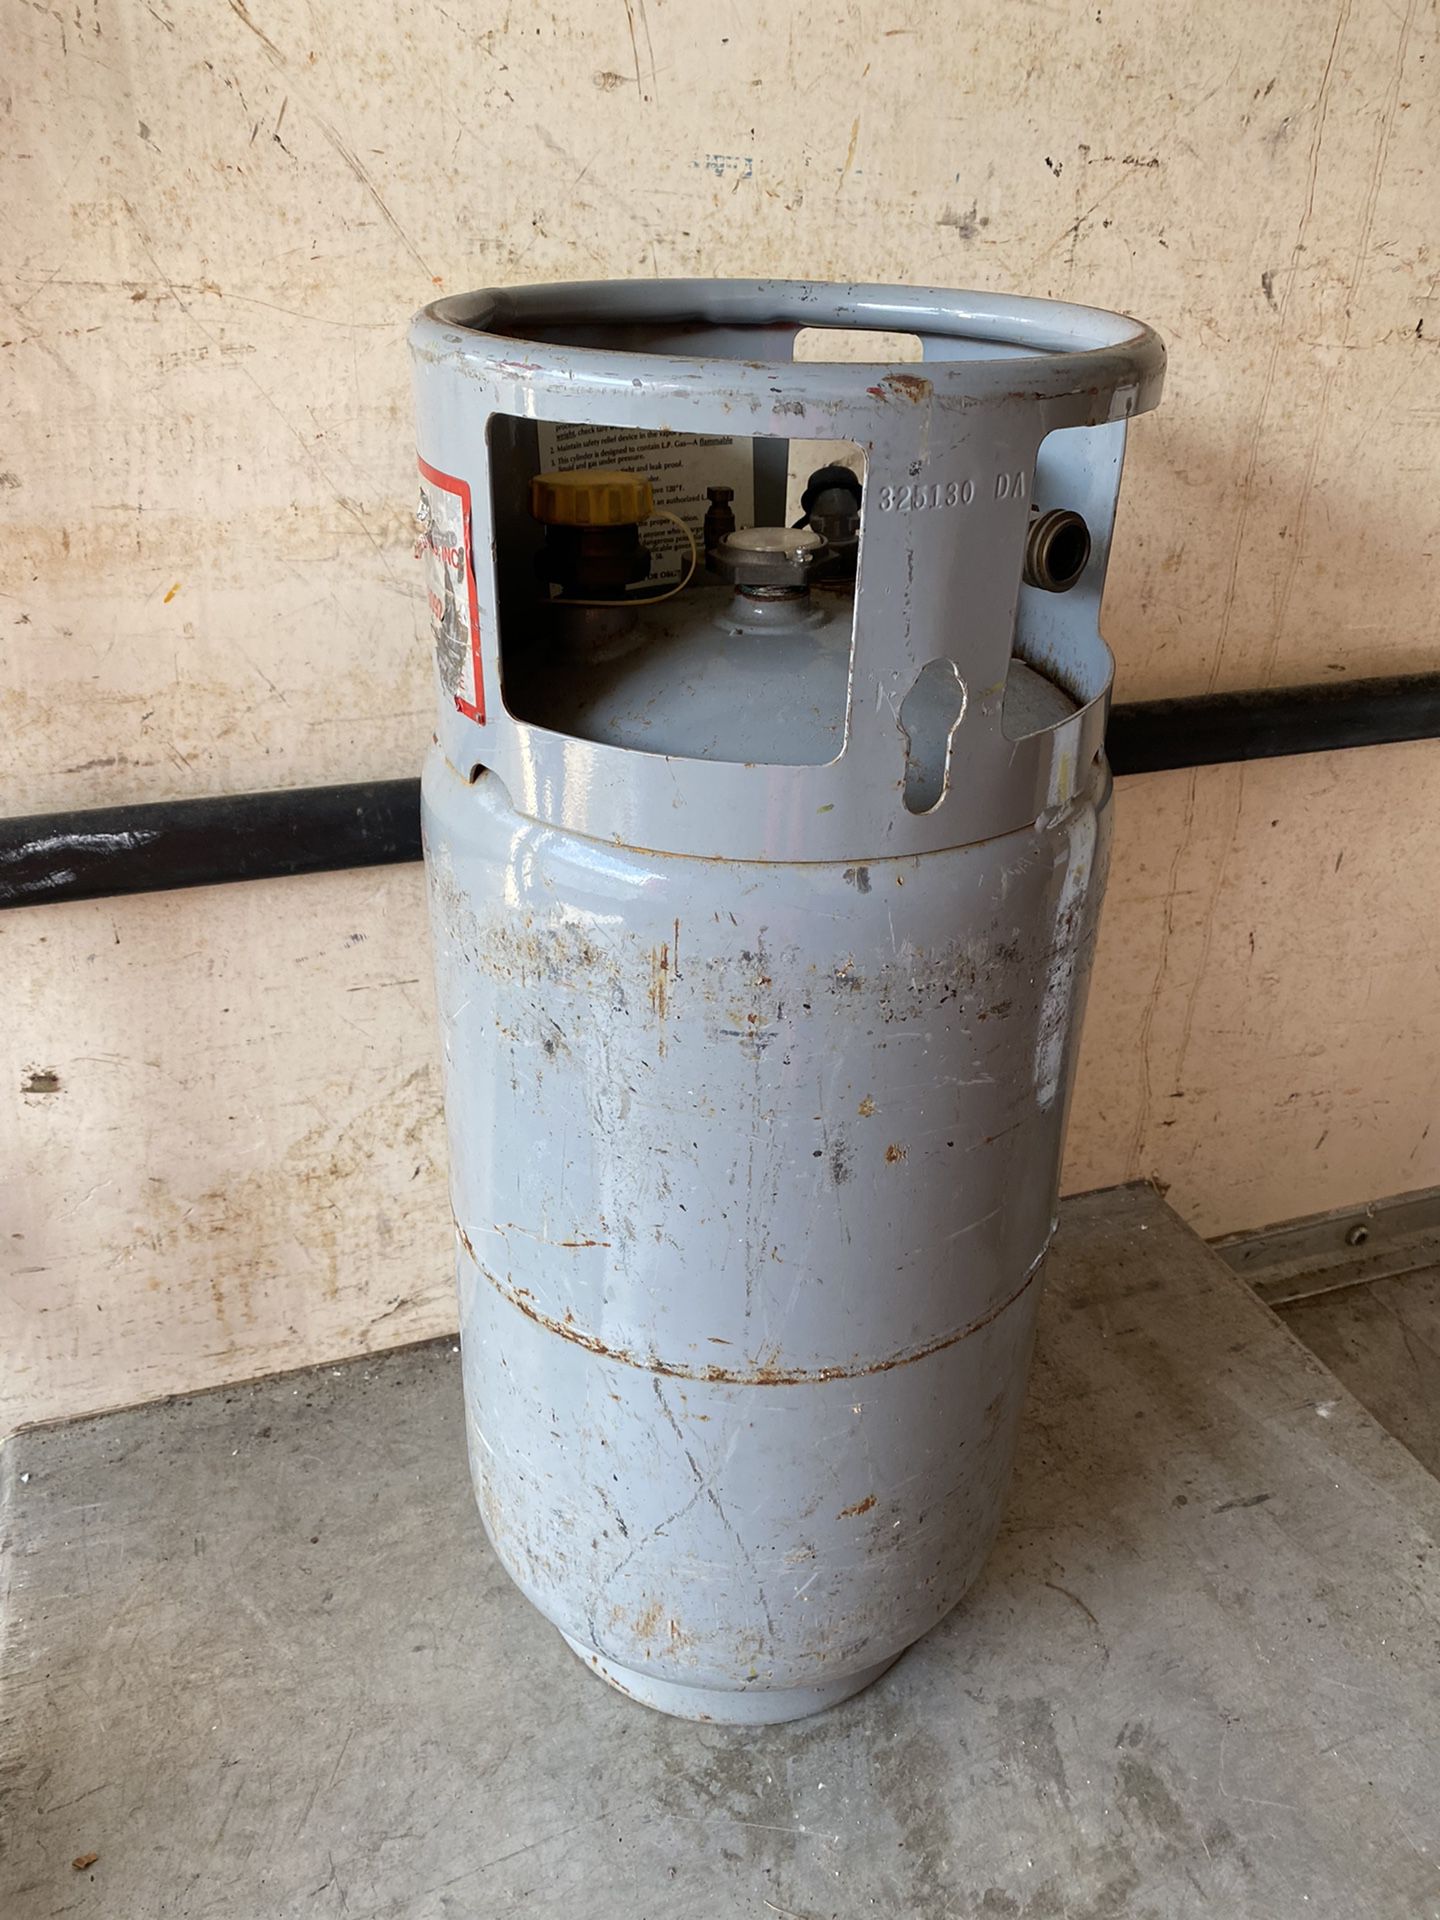 FULL LP Forklift tank liquid propane 35 pound propane tank